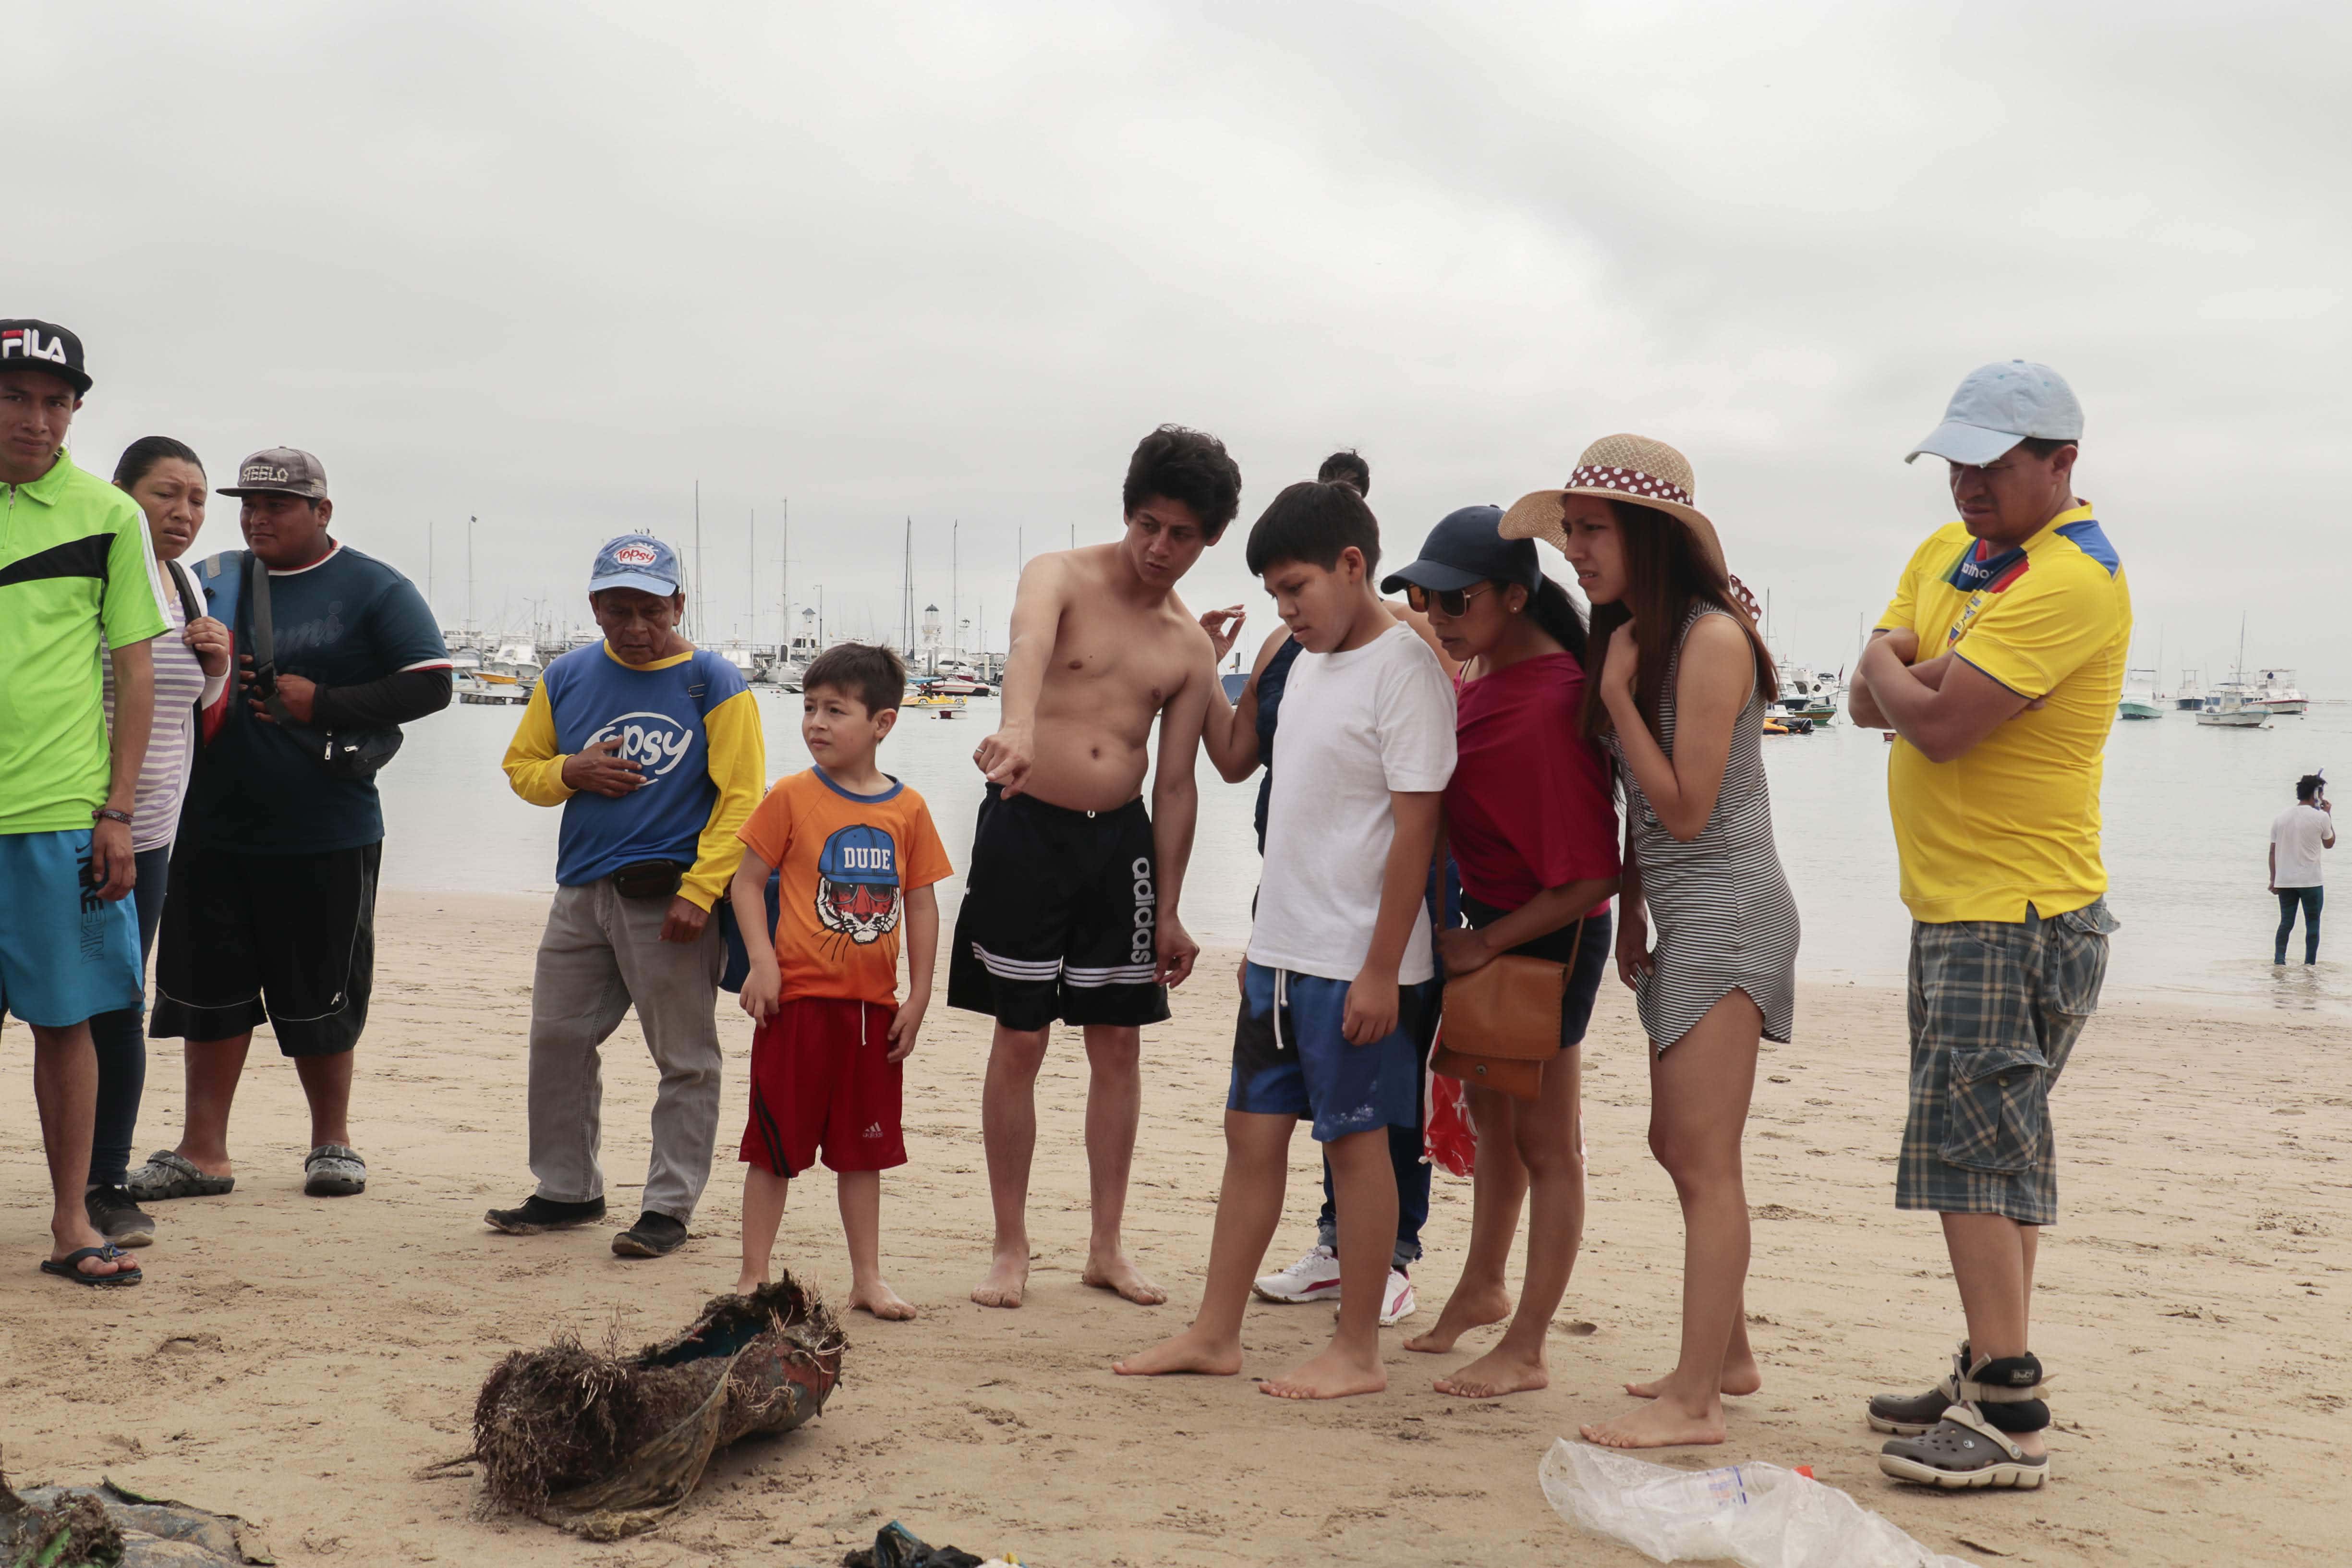 Tourists observing associated organisms to marine litter